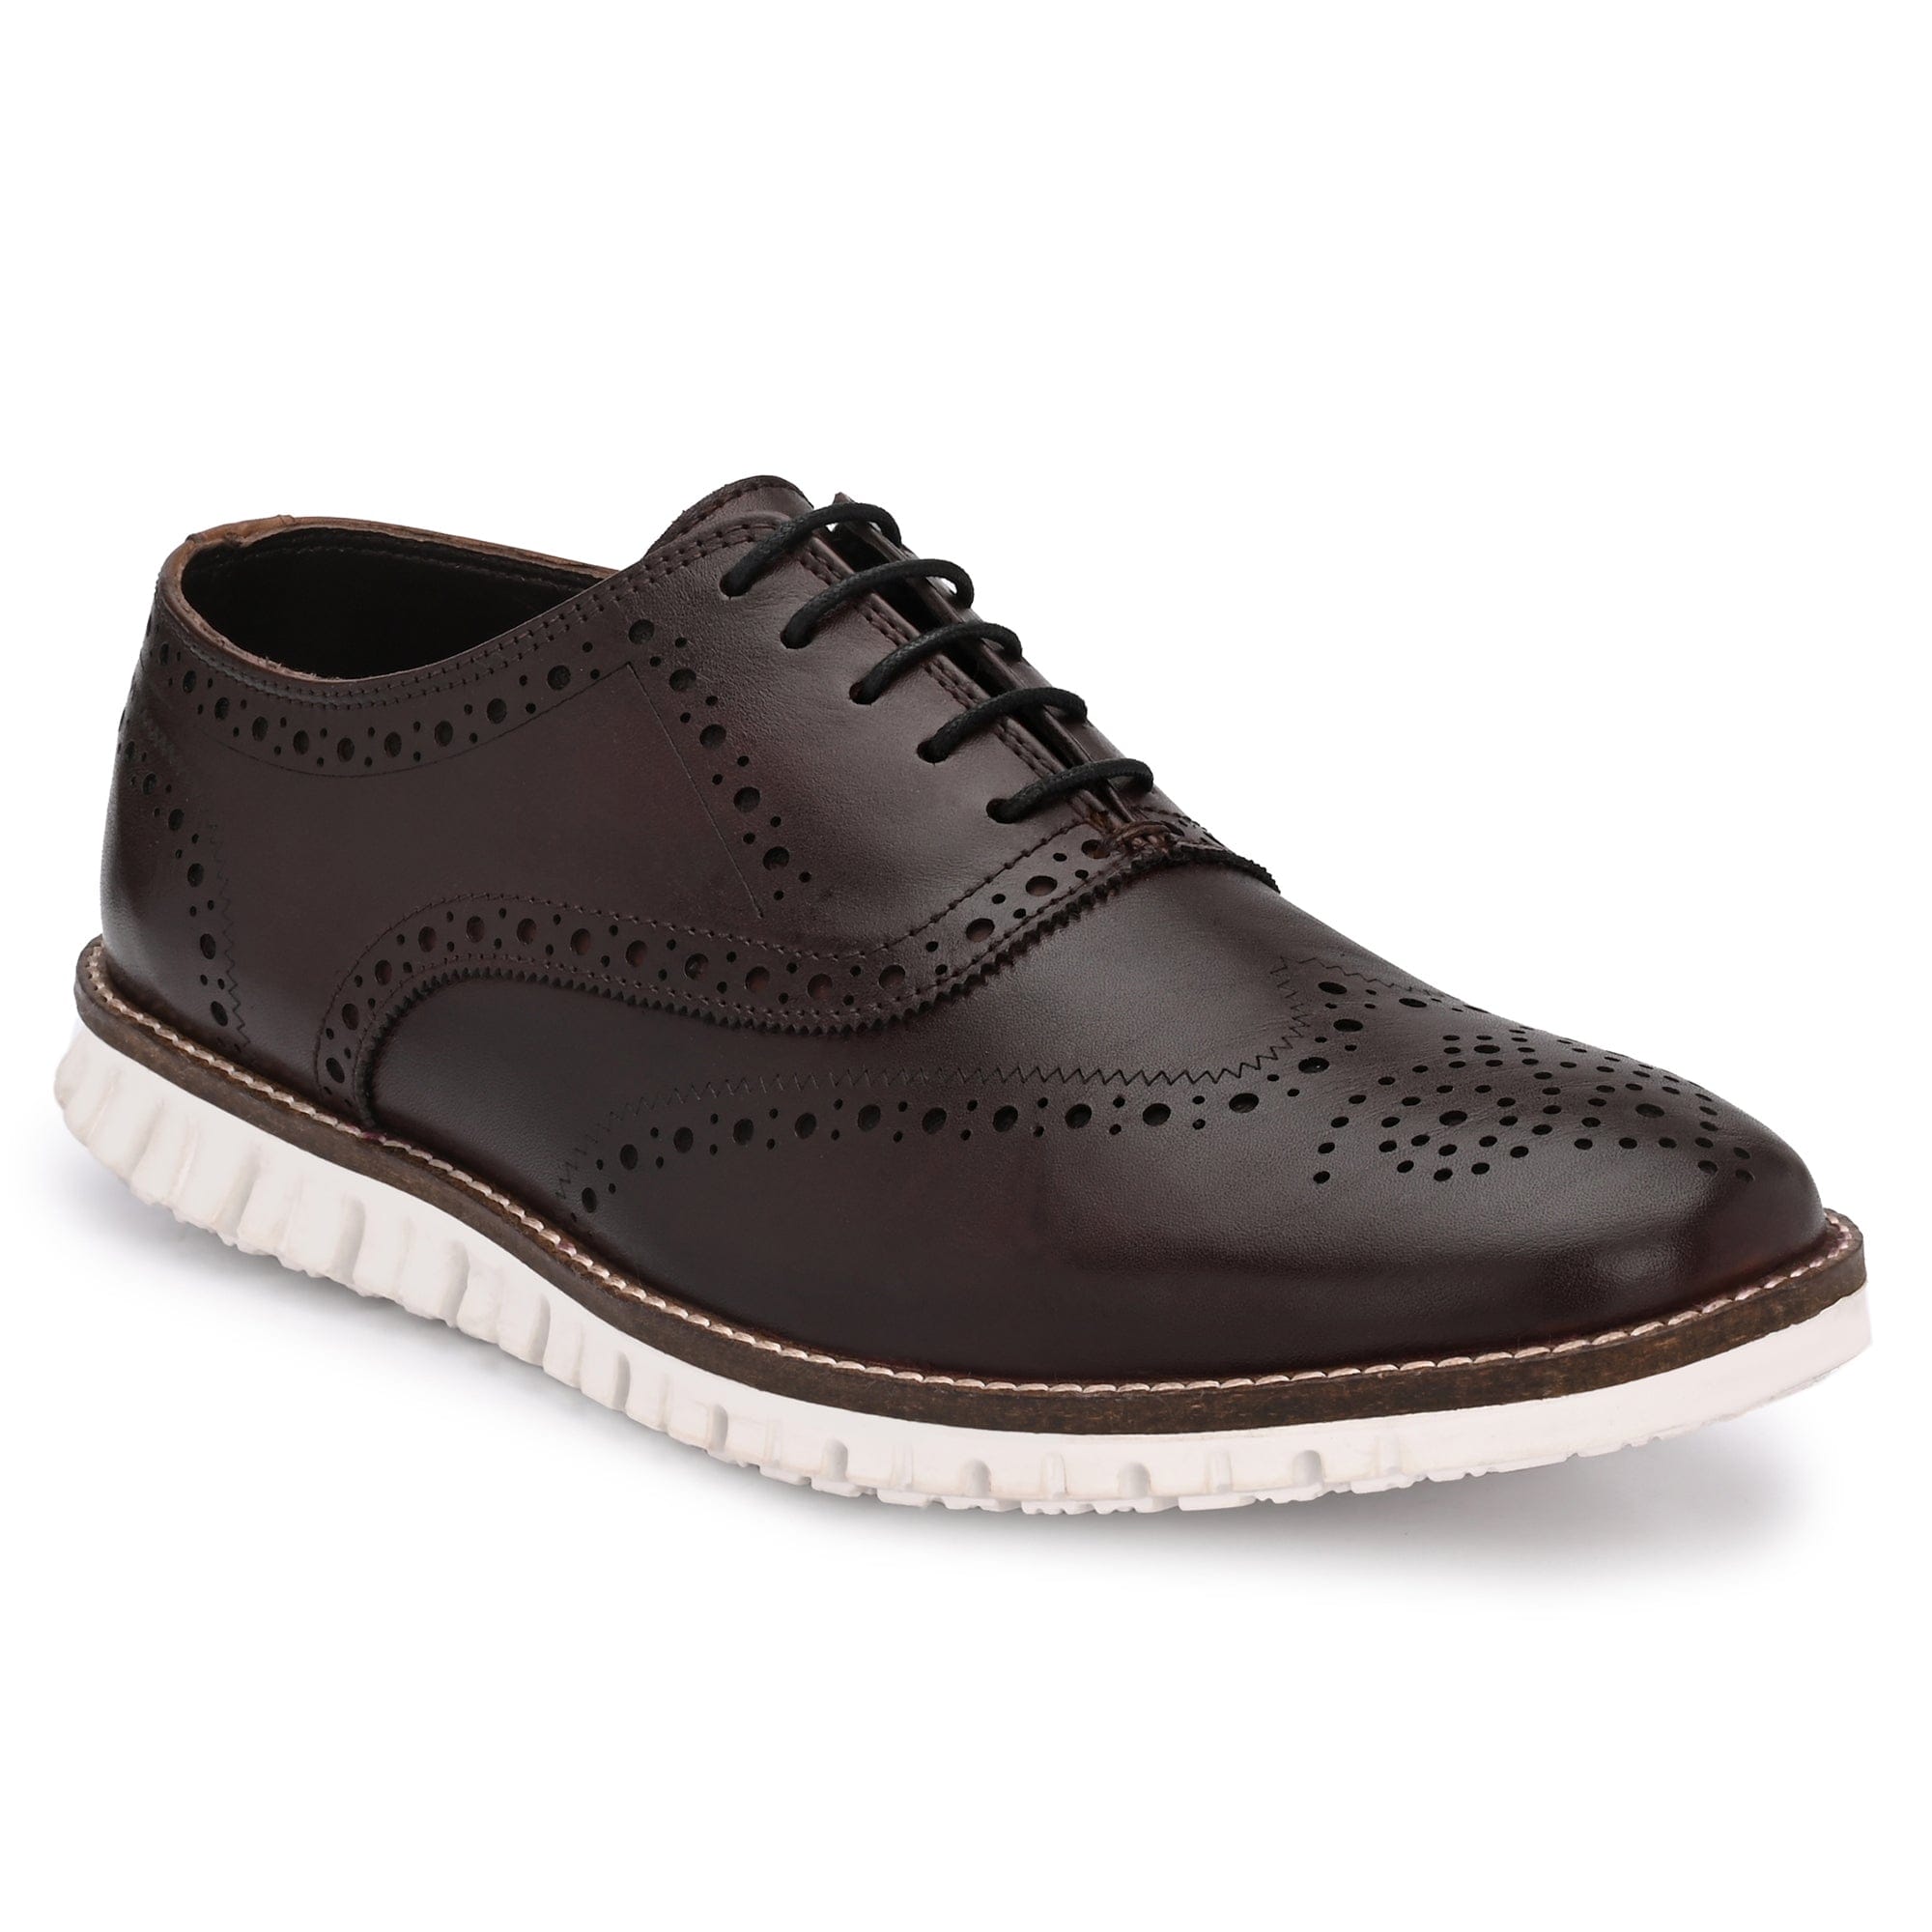 Legwork Informal Cobblestone Brown Italian Leather Shoes